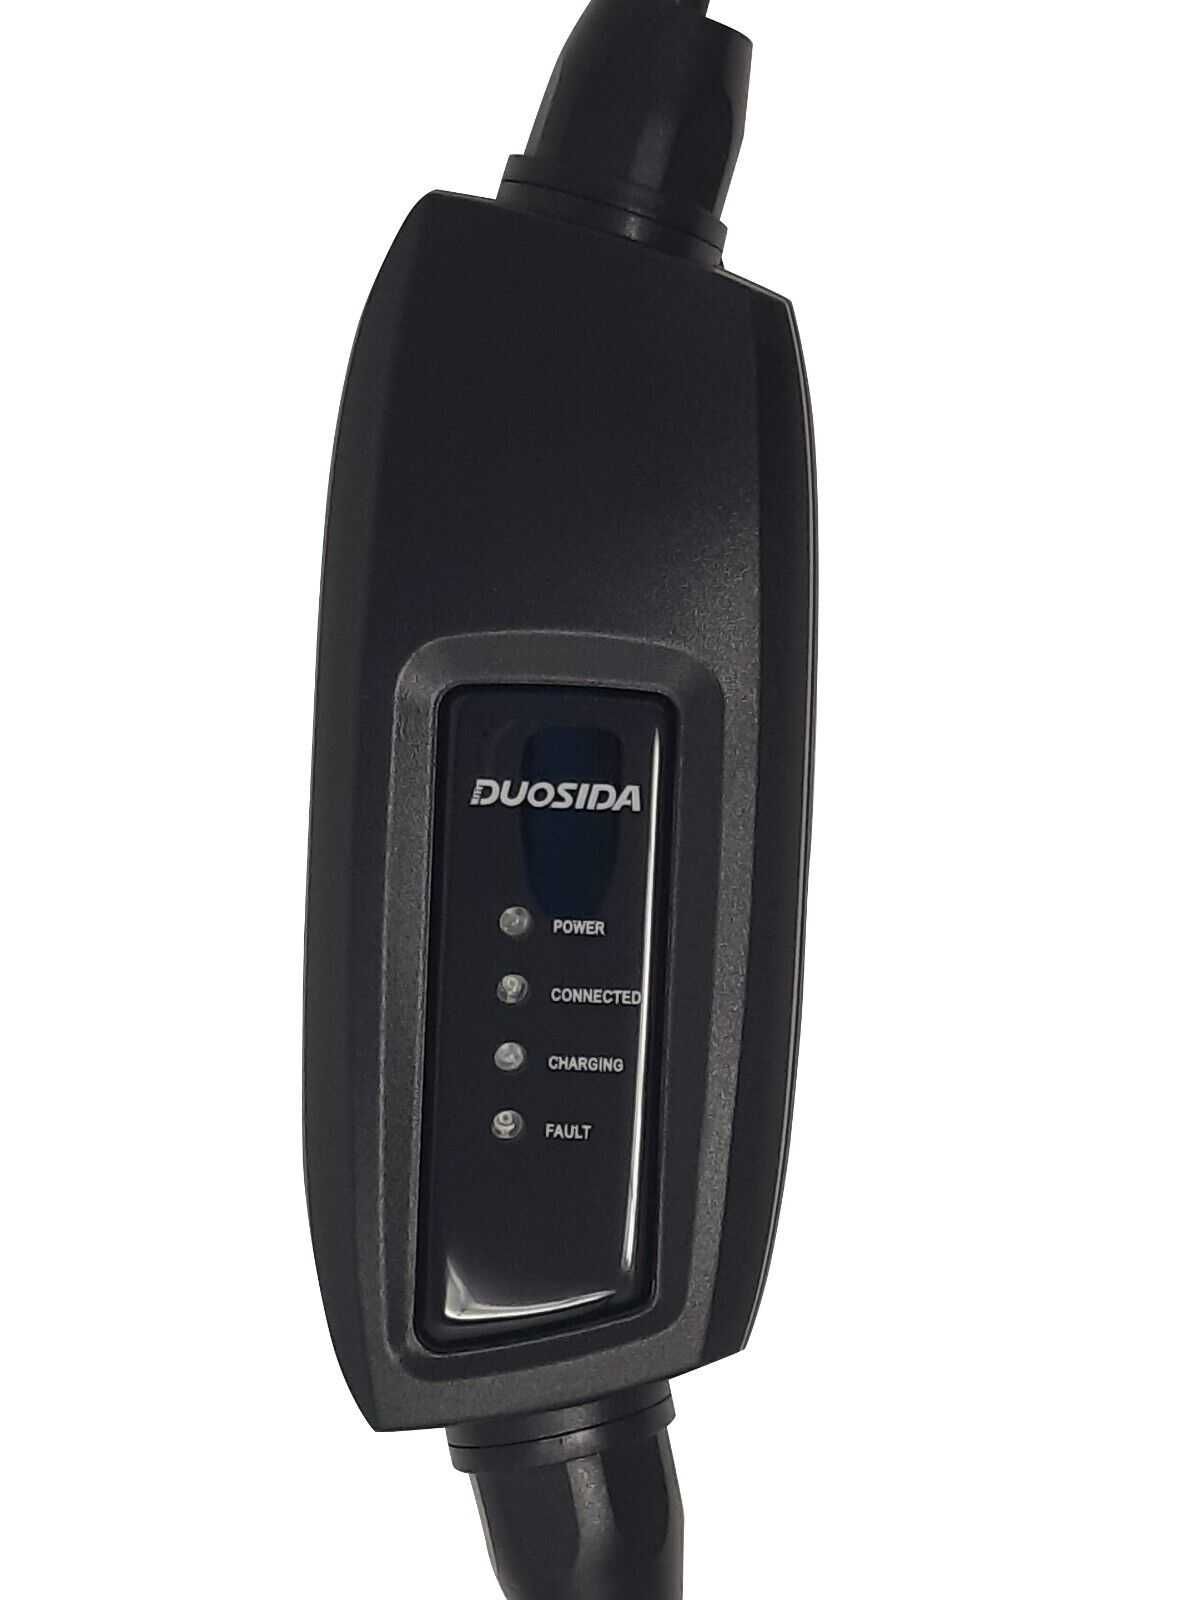 Опт. Зарядное устройство для электромобиля Duosida уровня 2 EV J1772